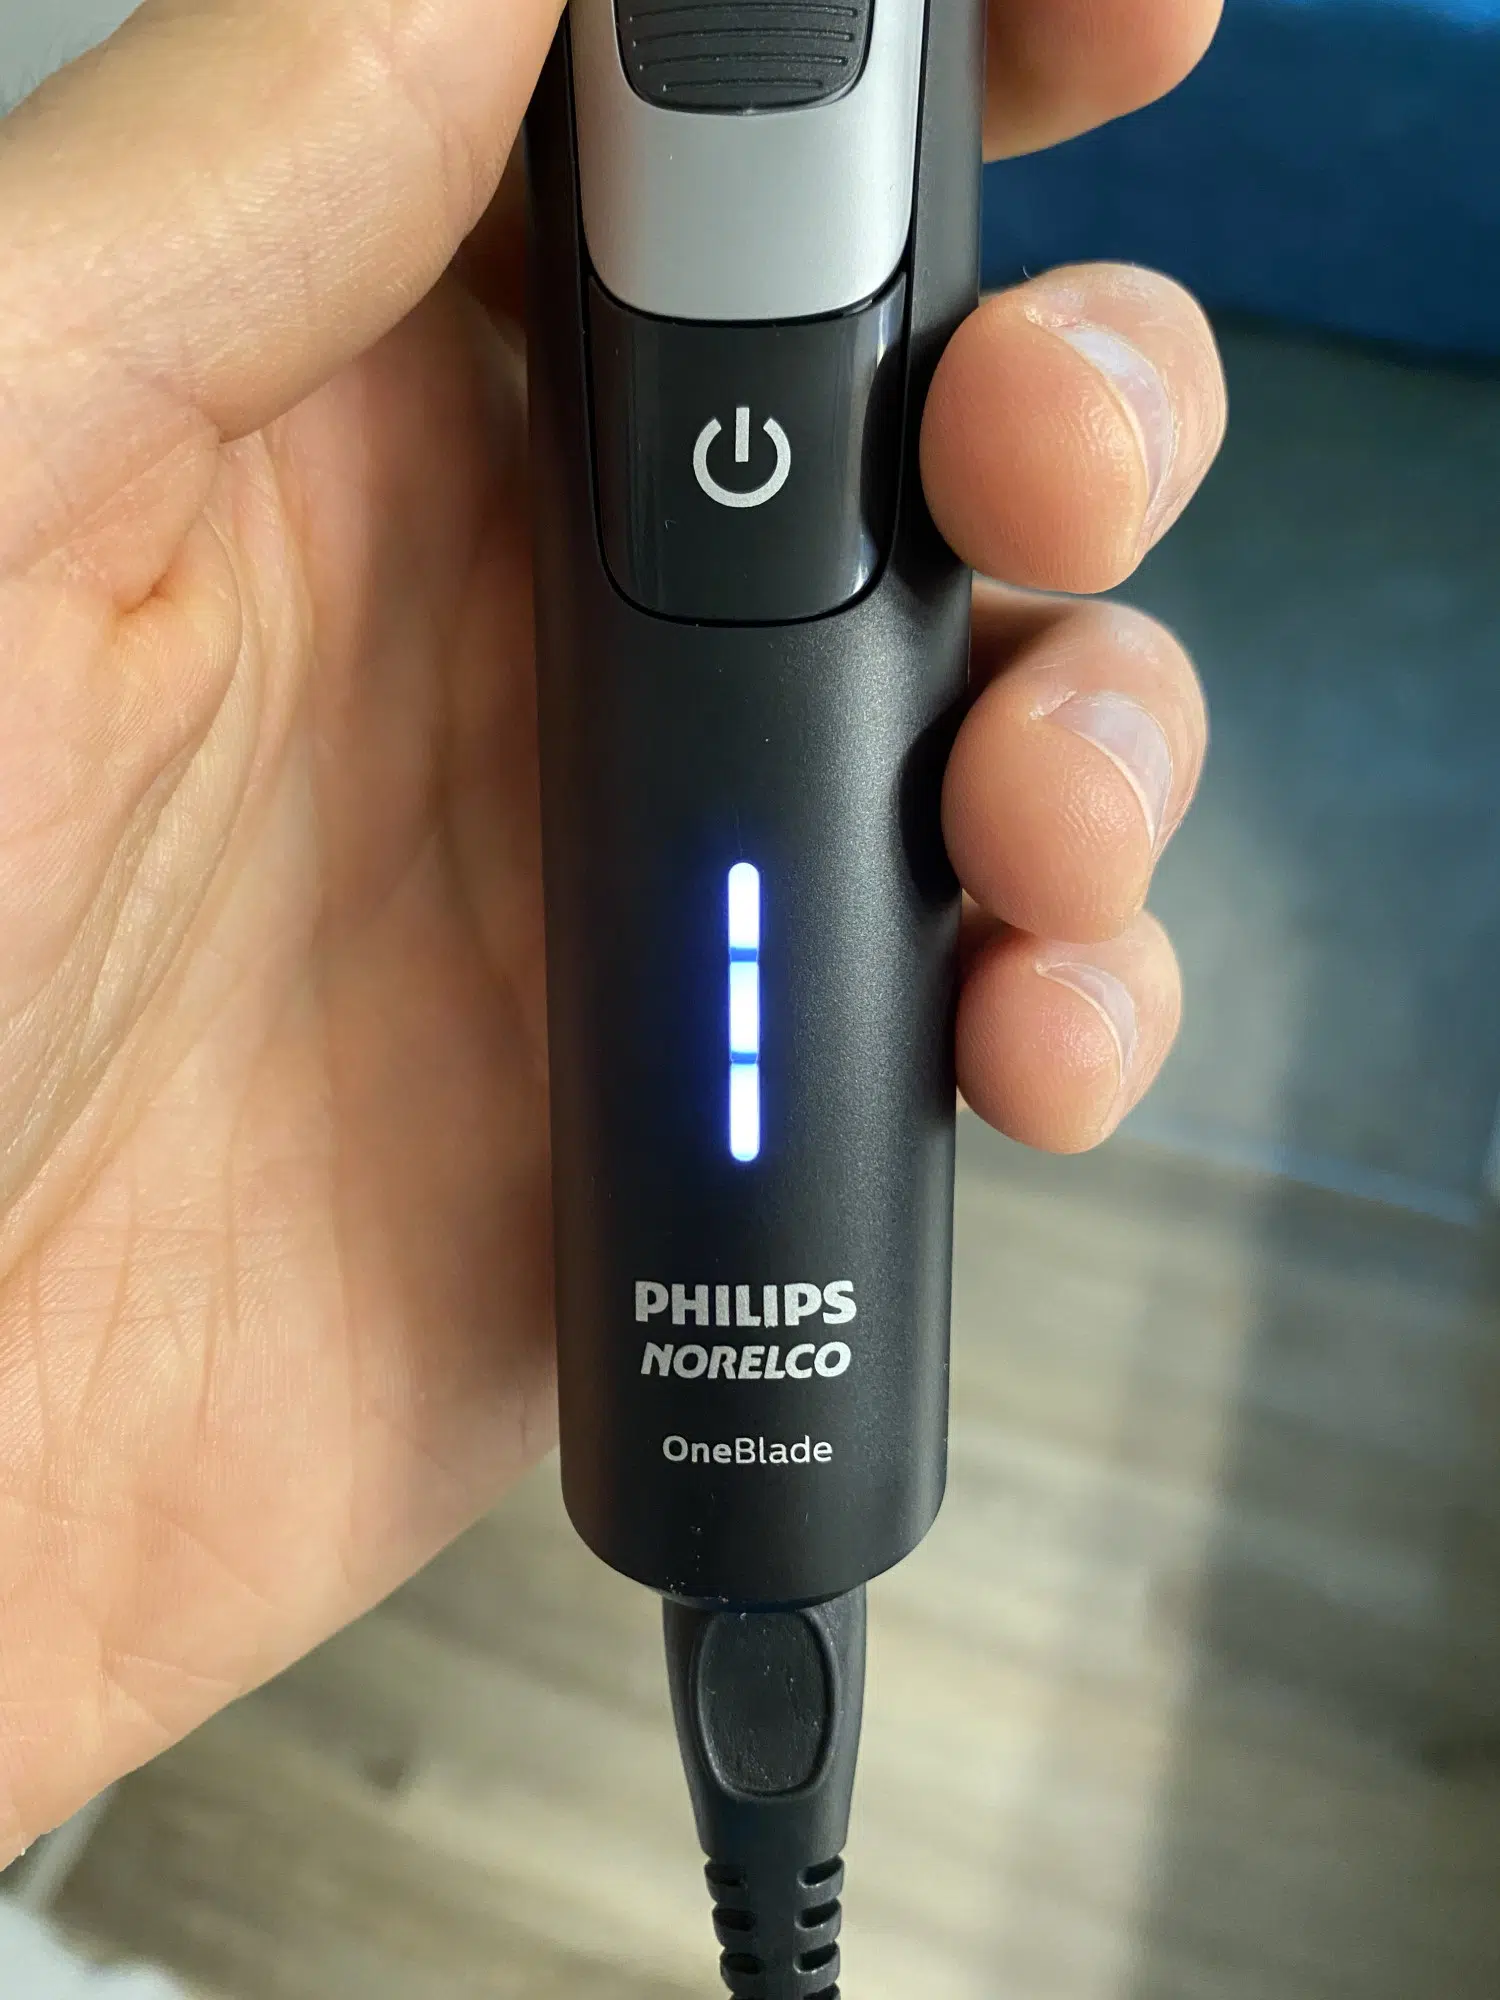 Philips Norelco Oneblade Pro charging indicator